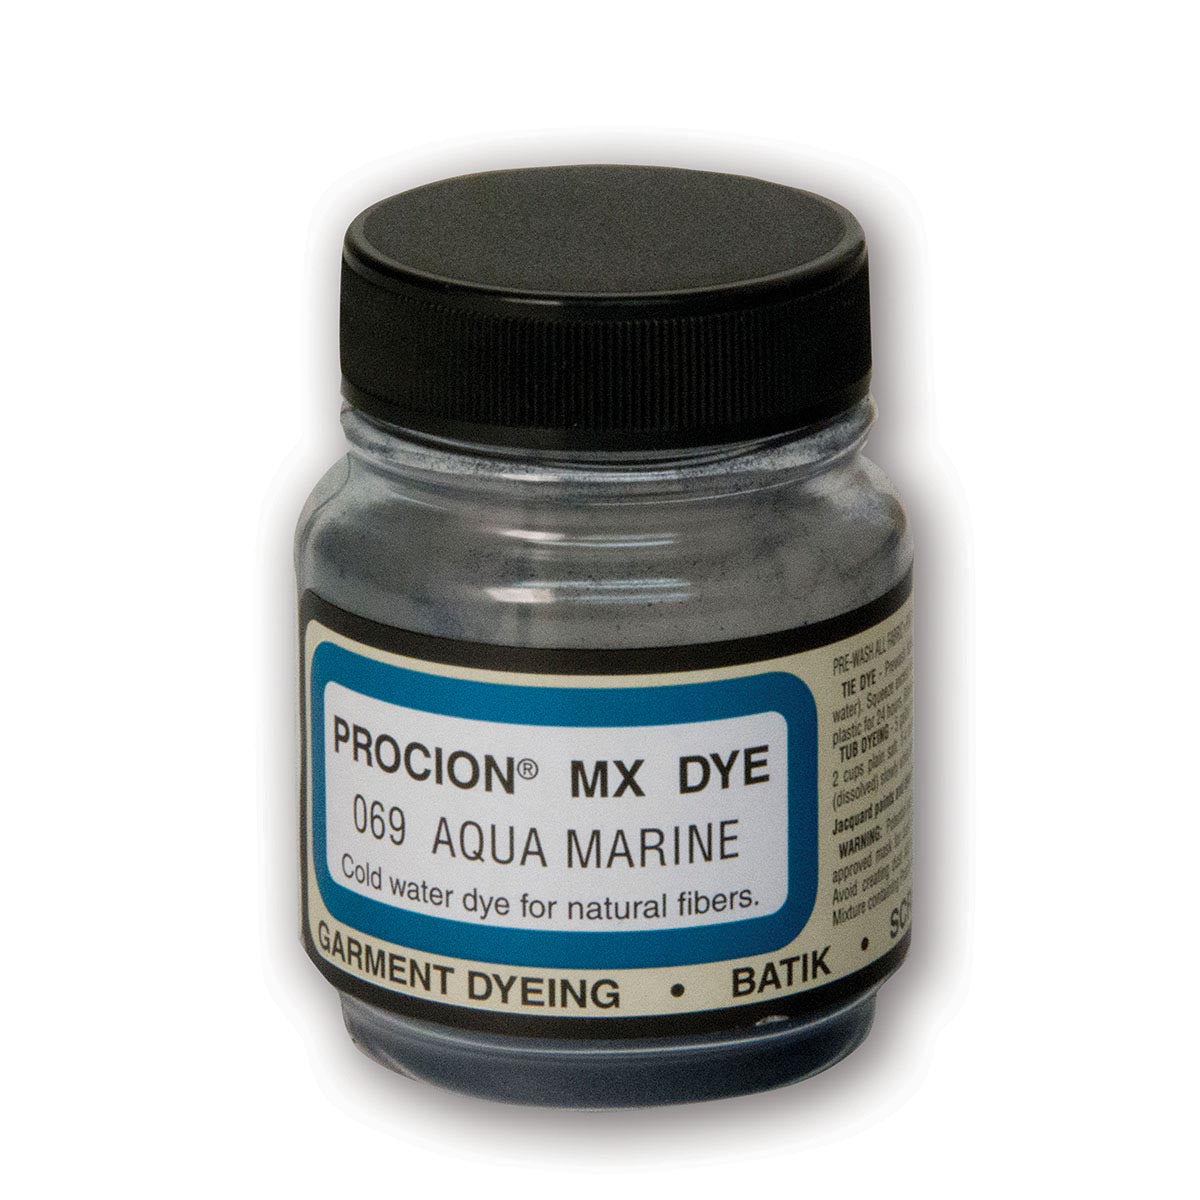 Jacquard - Procion MX Dye - Stoff Textil - Aquamarin 069